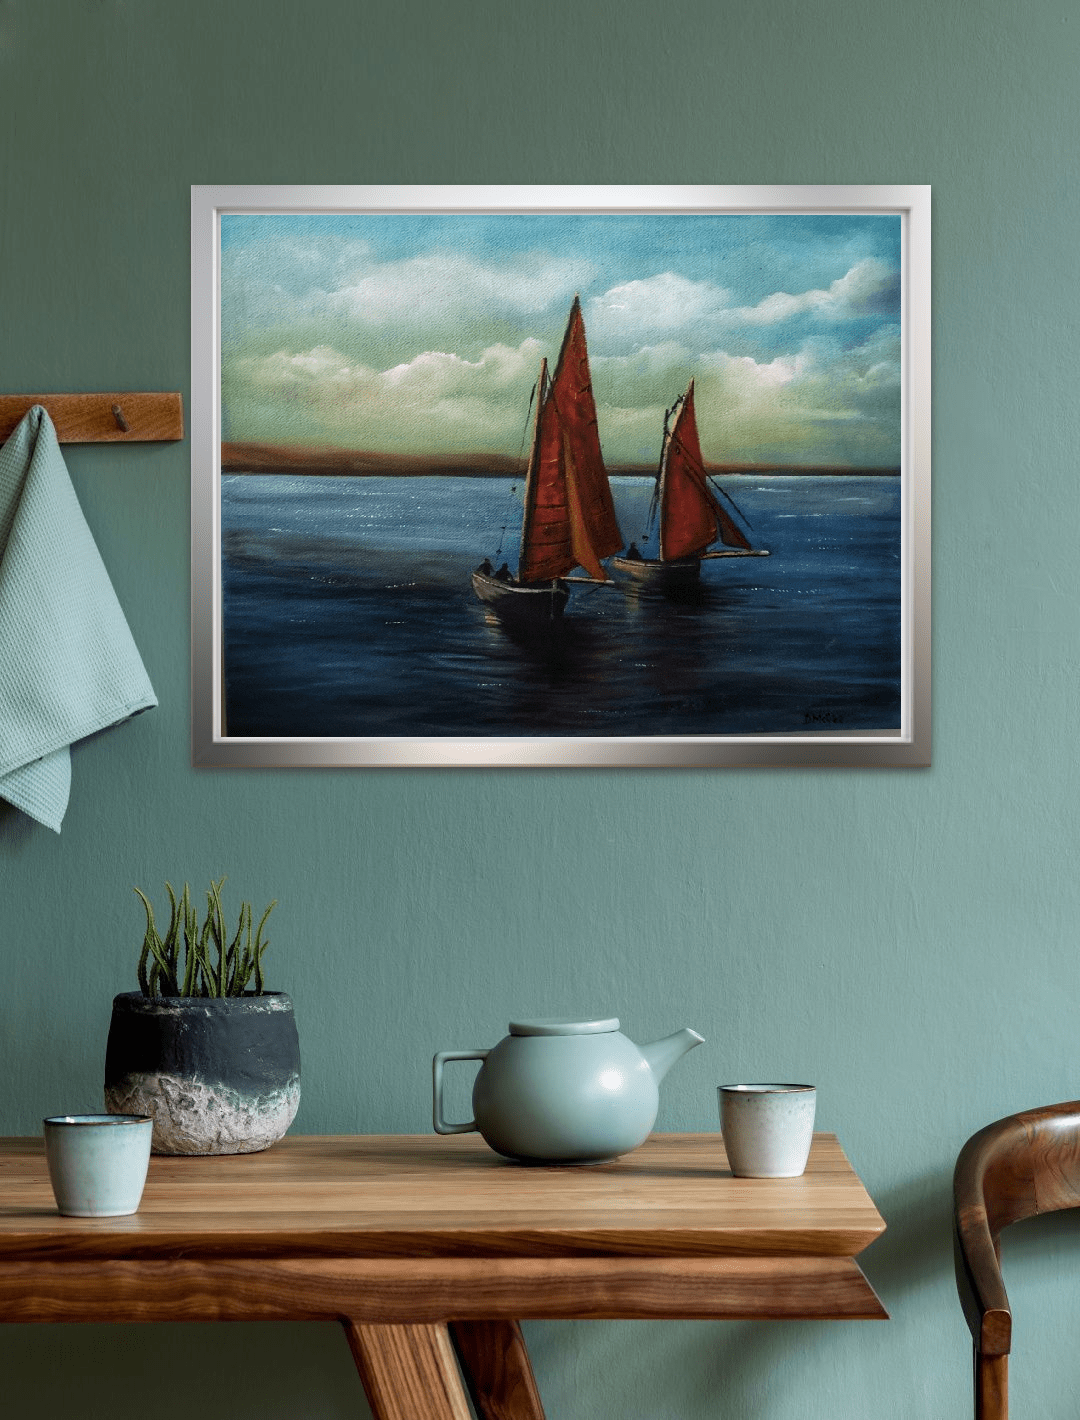 two Galway Hooker Boats in connemara in room setting - irish seascape art